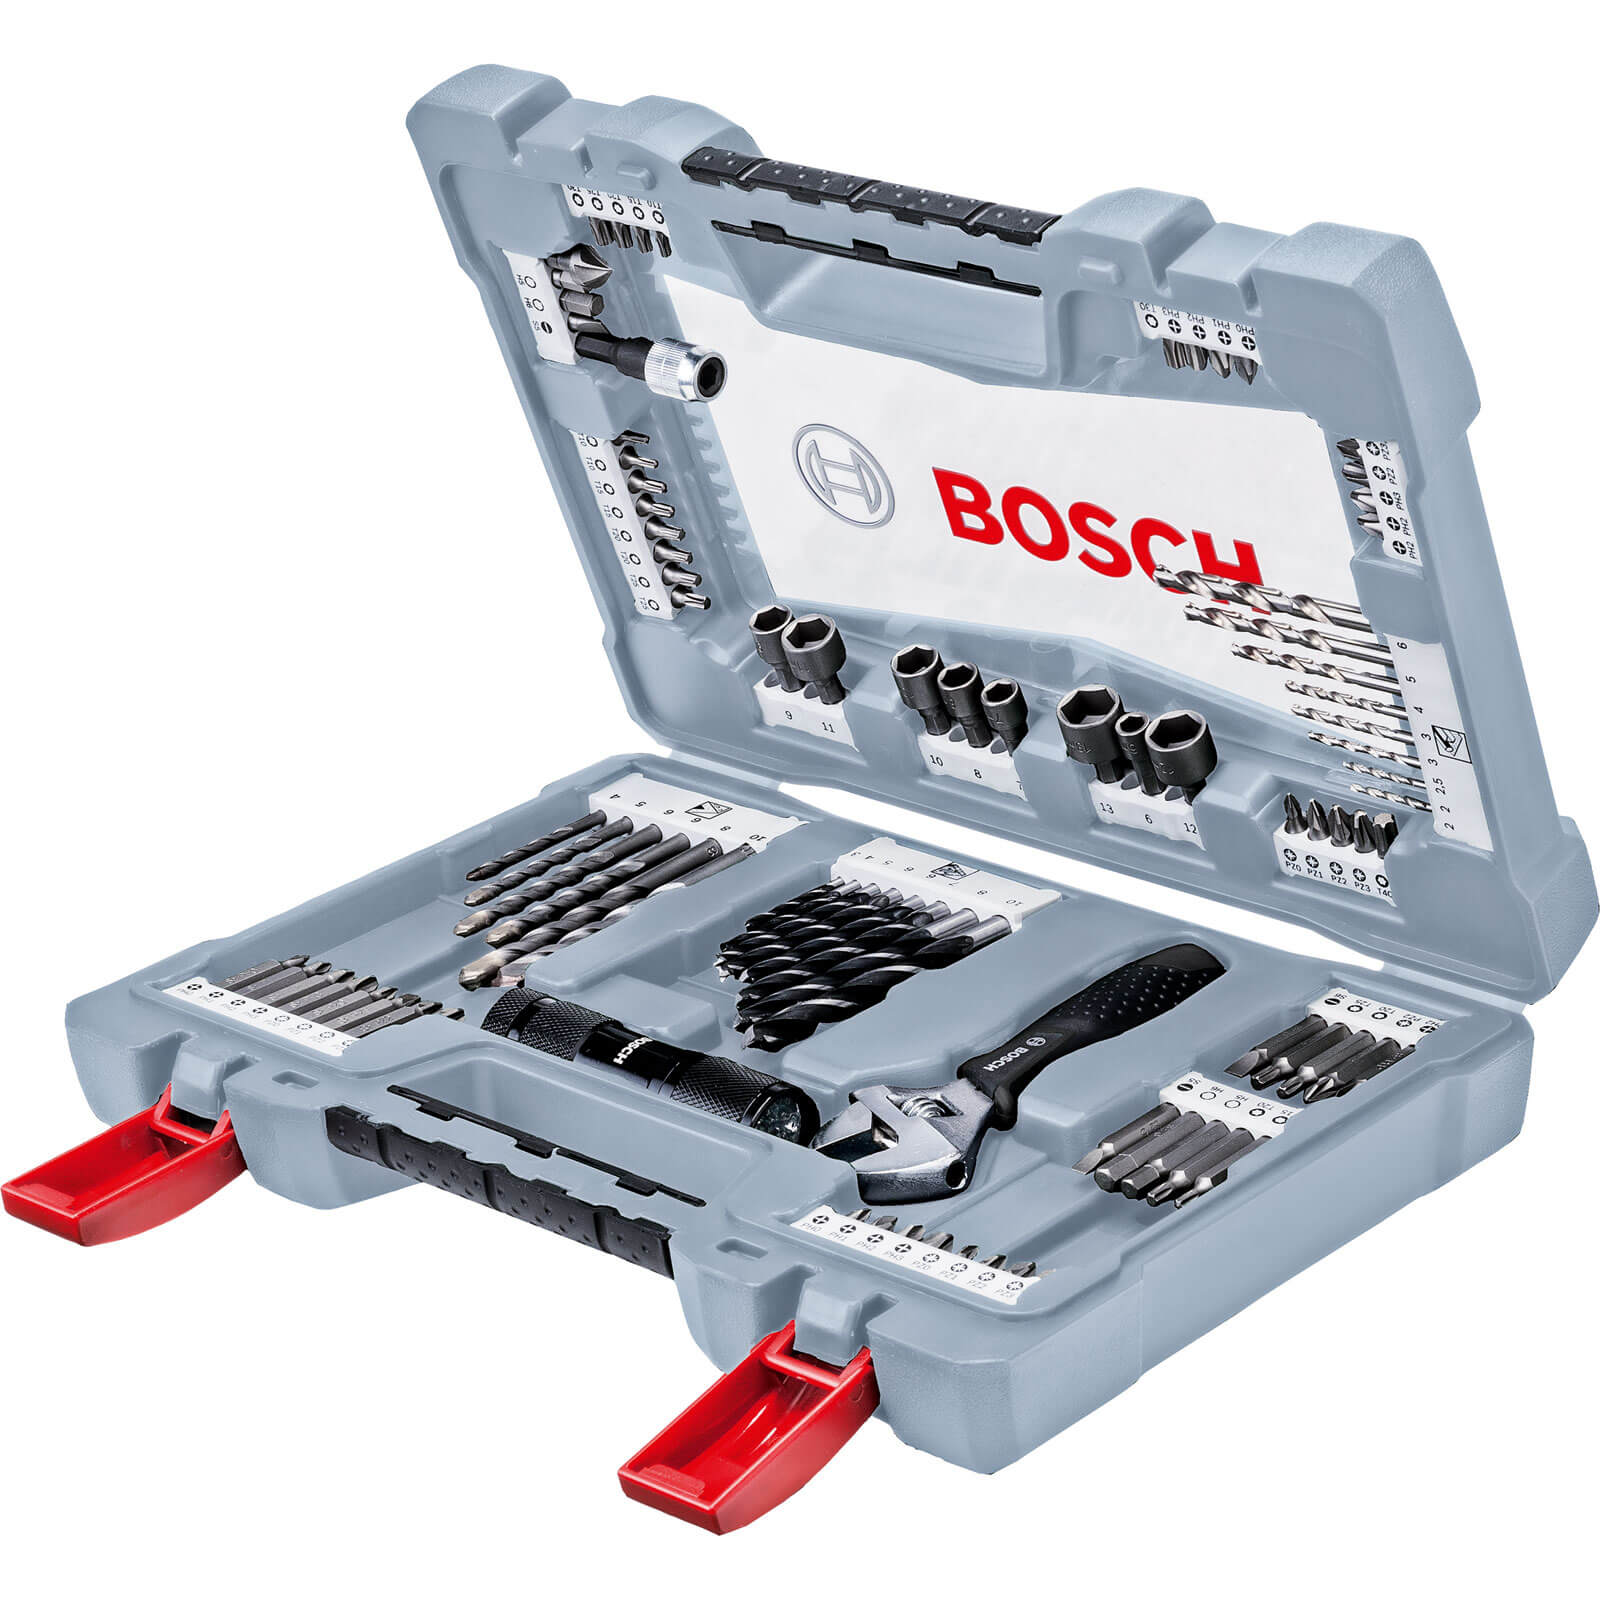 Photo of Bosch 91 Piece Premium Power Tool Accessory Drill And Screwdriver Bit Set